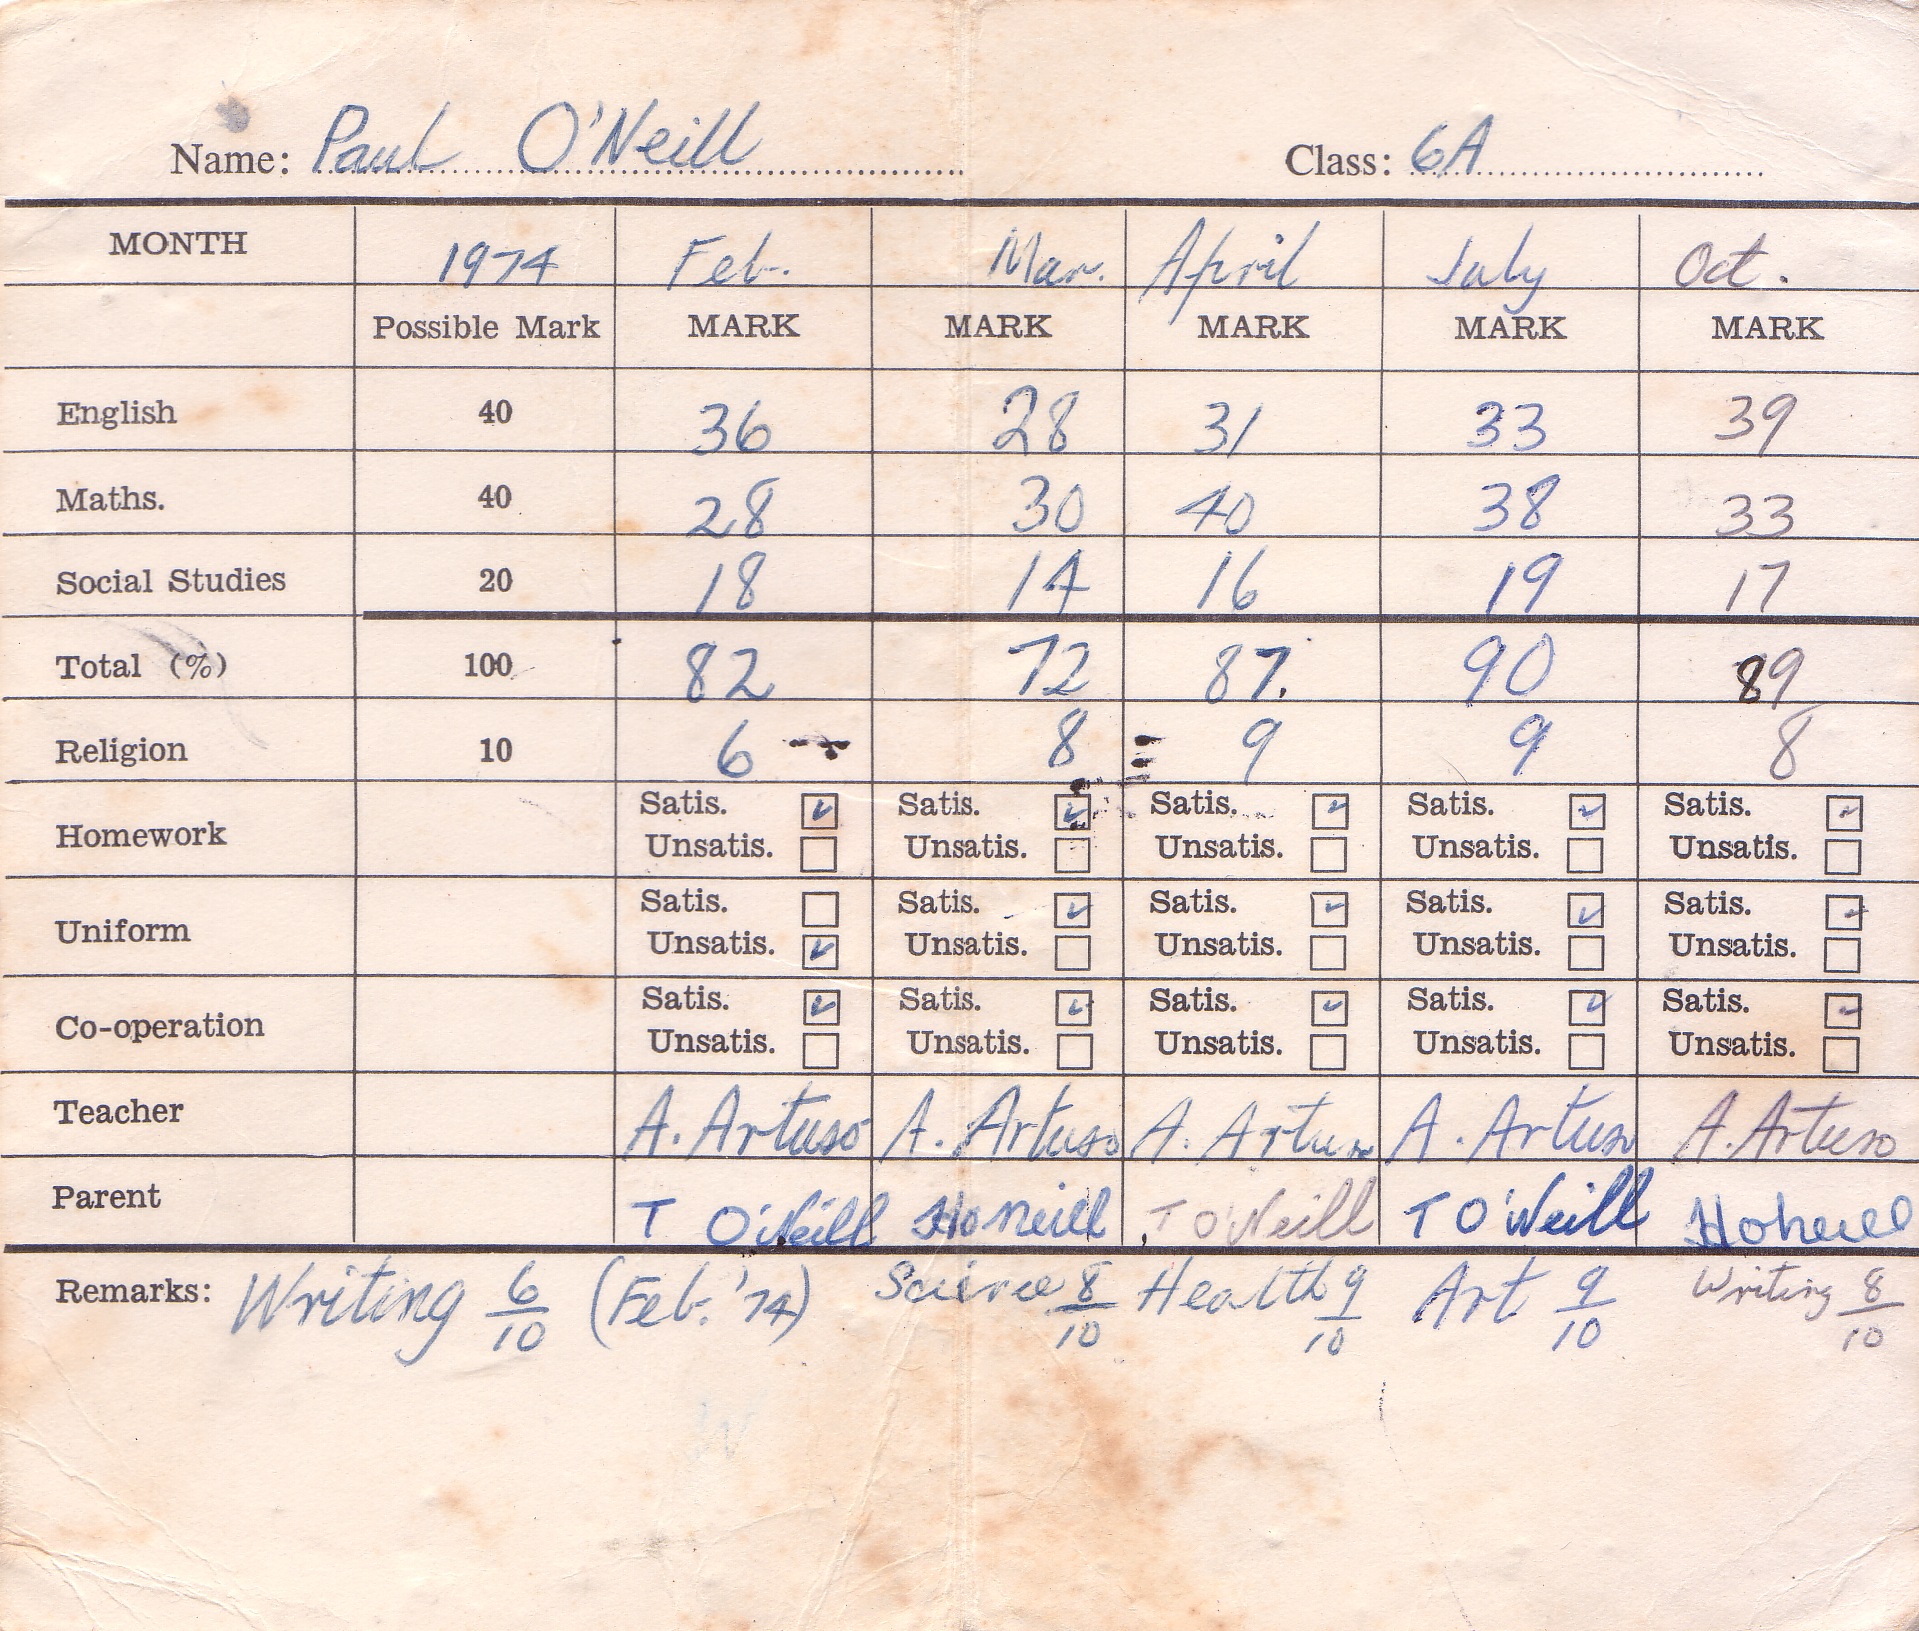 1974 - Class 6A School report card